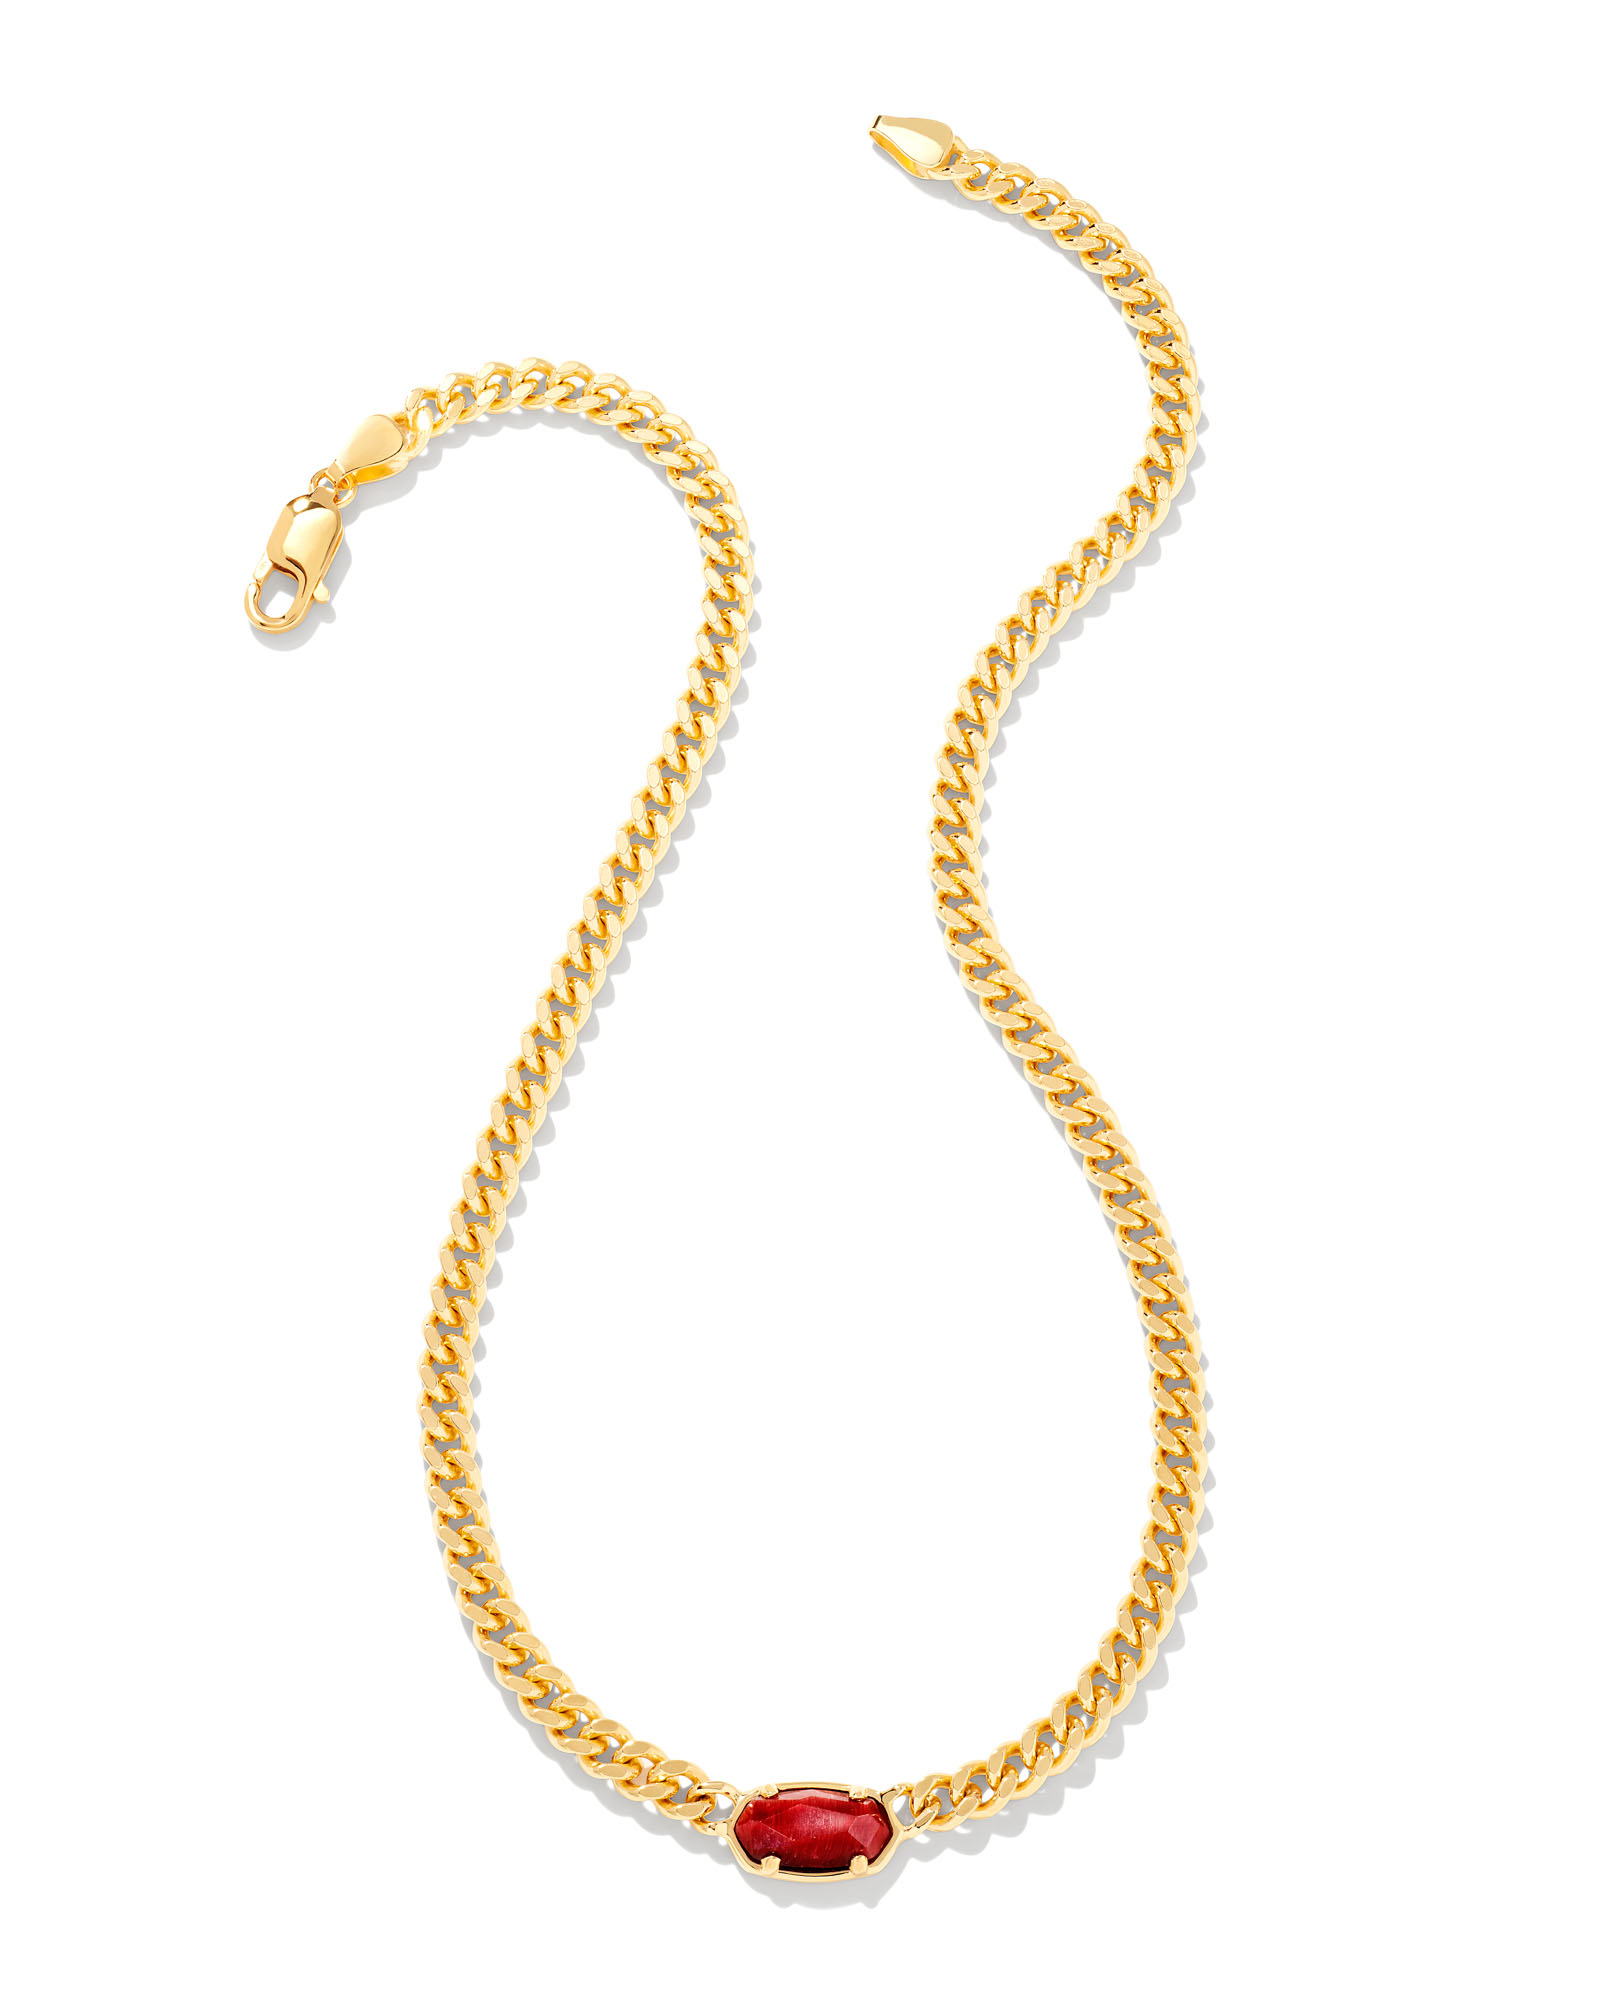 Curb Chain Earrings for Women in Gold Vermeil - Talisa